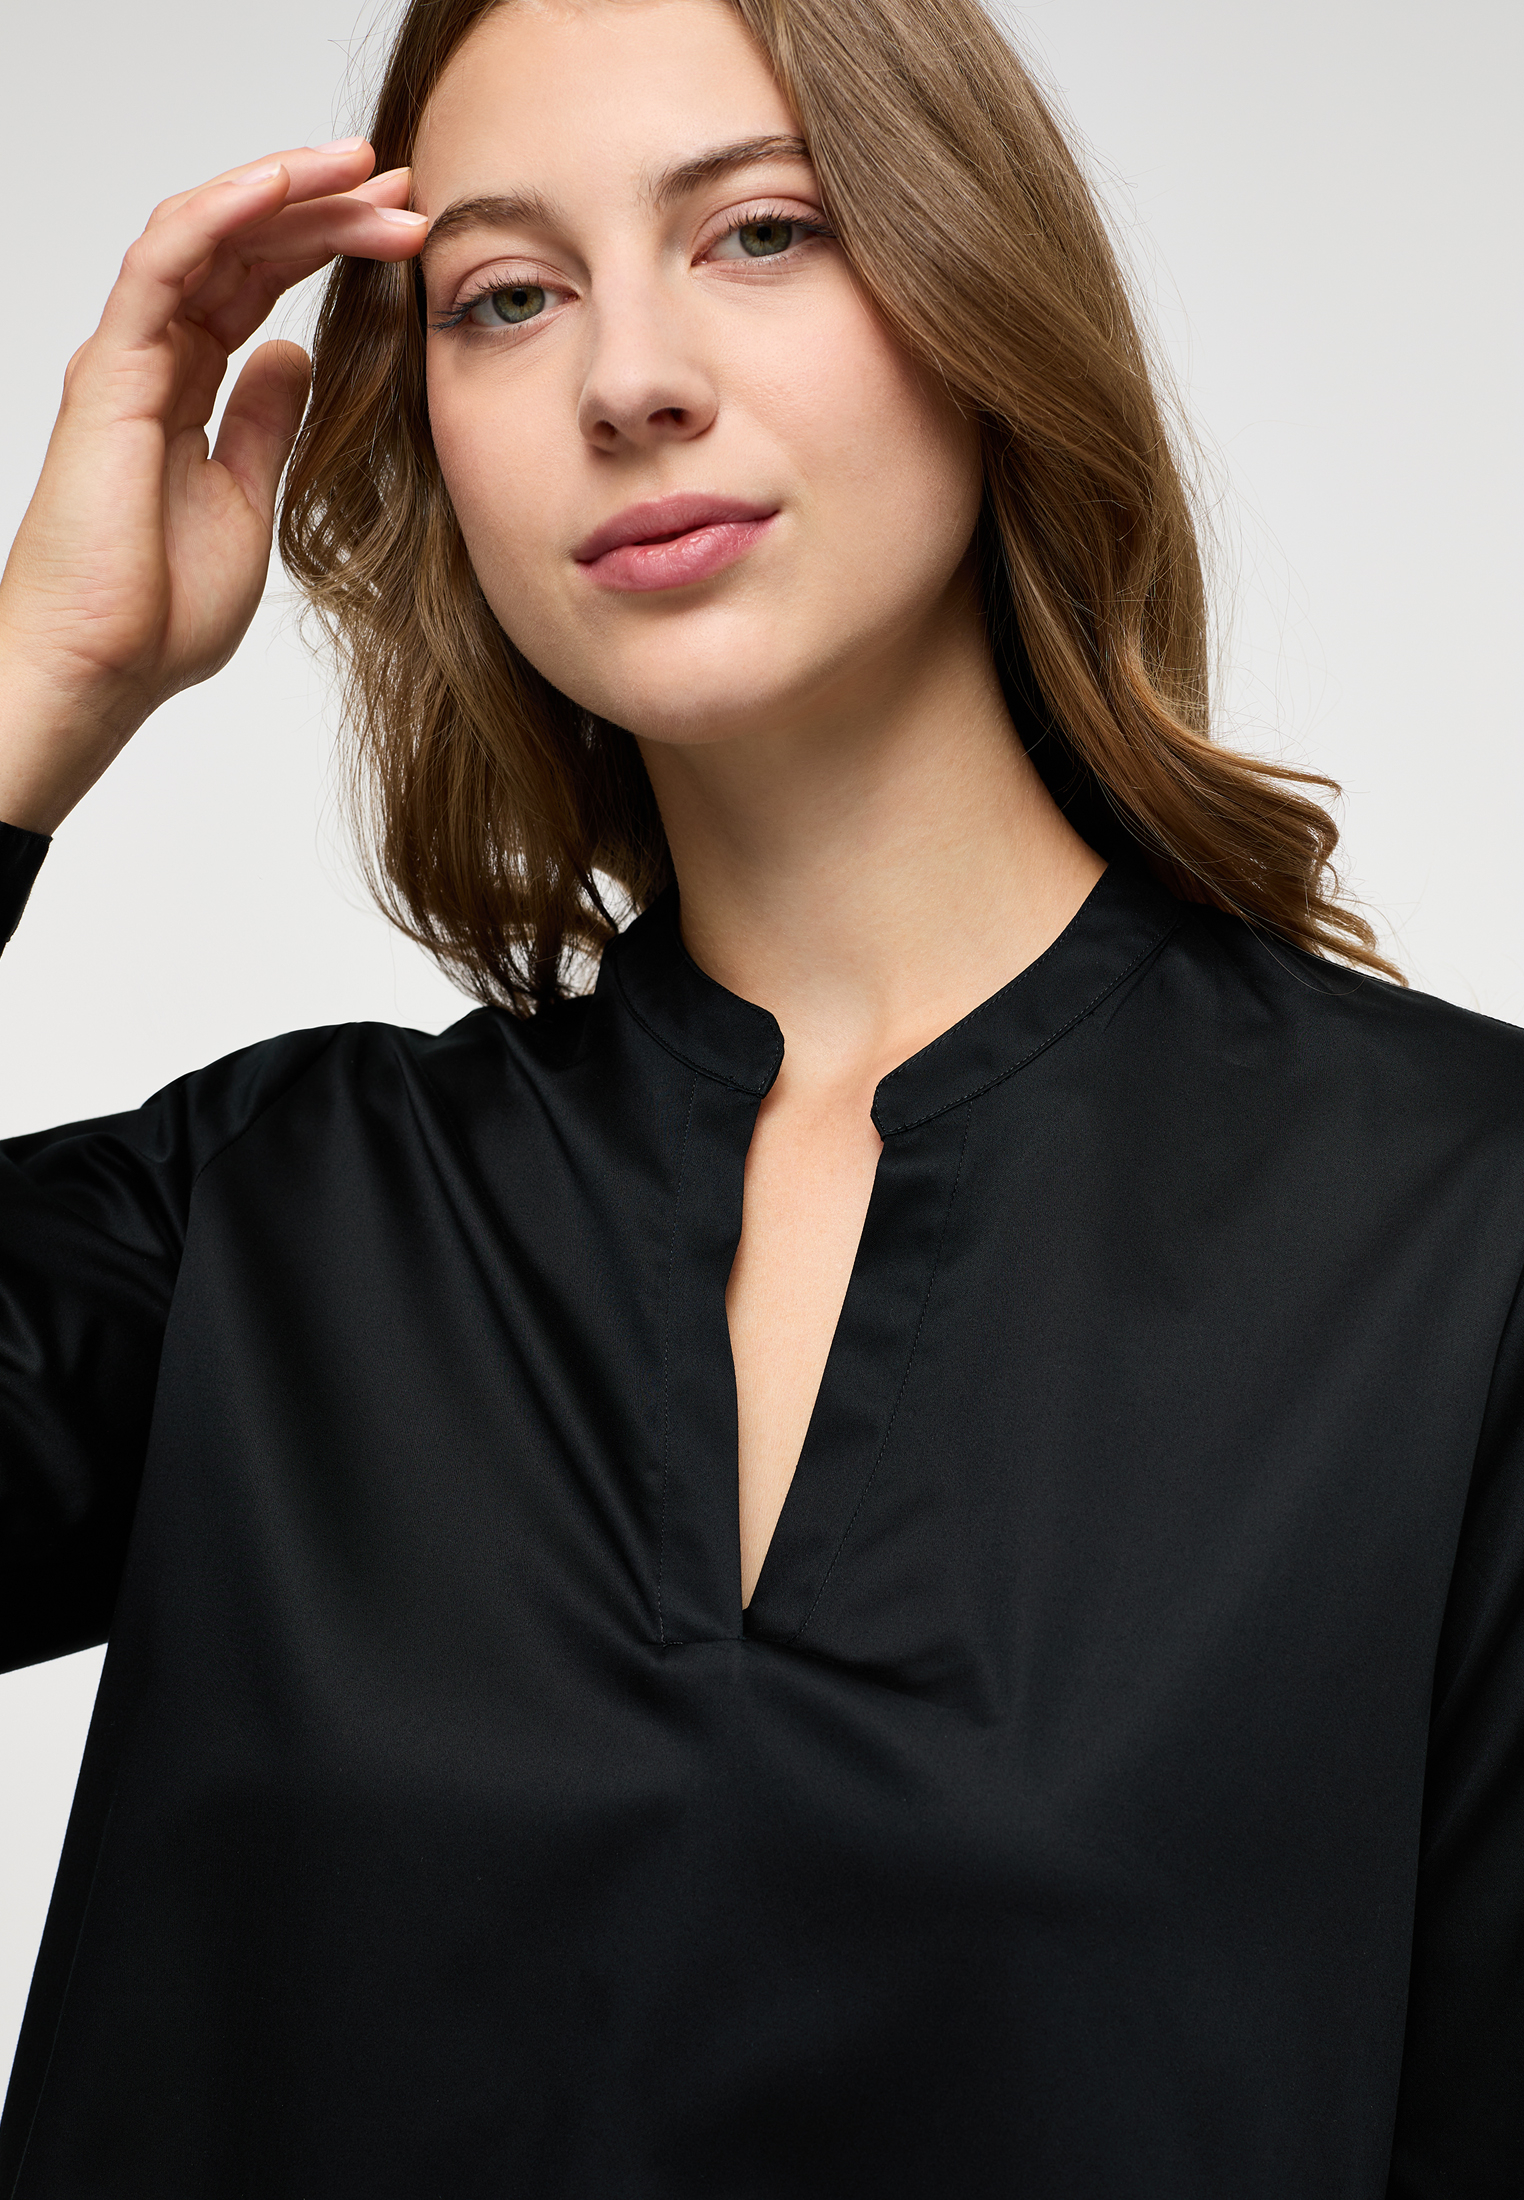 Satin Shirt Bluse in schwarz unifarben | schwarz | 44 | Langarm |  2BL00618-03-91-44-1/1 | Blusenshirts